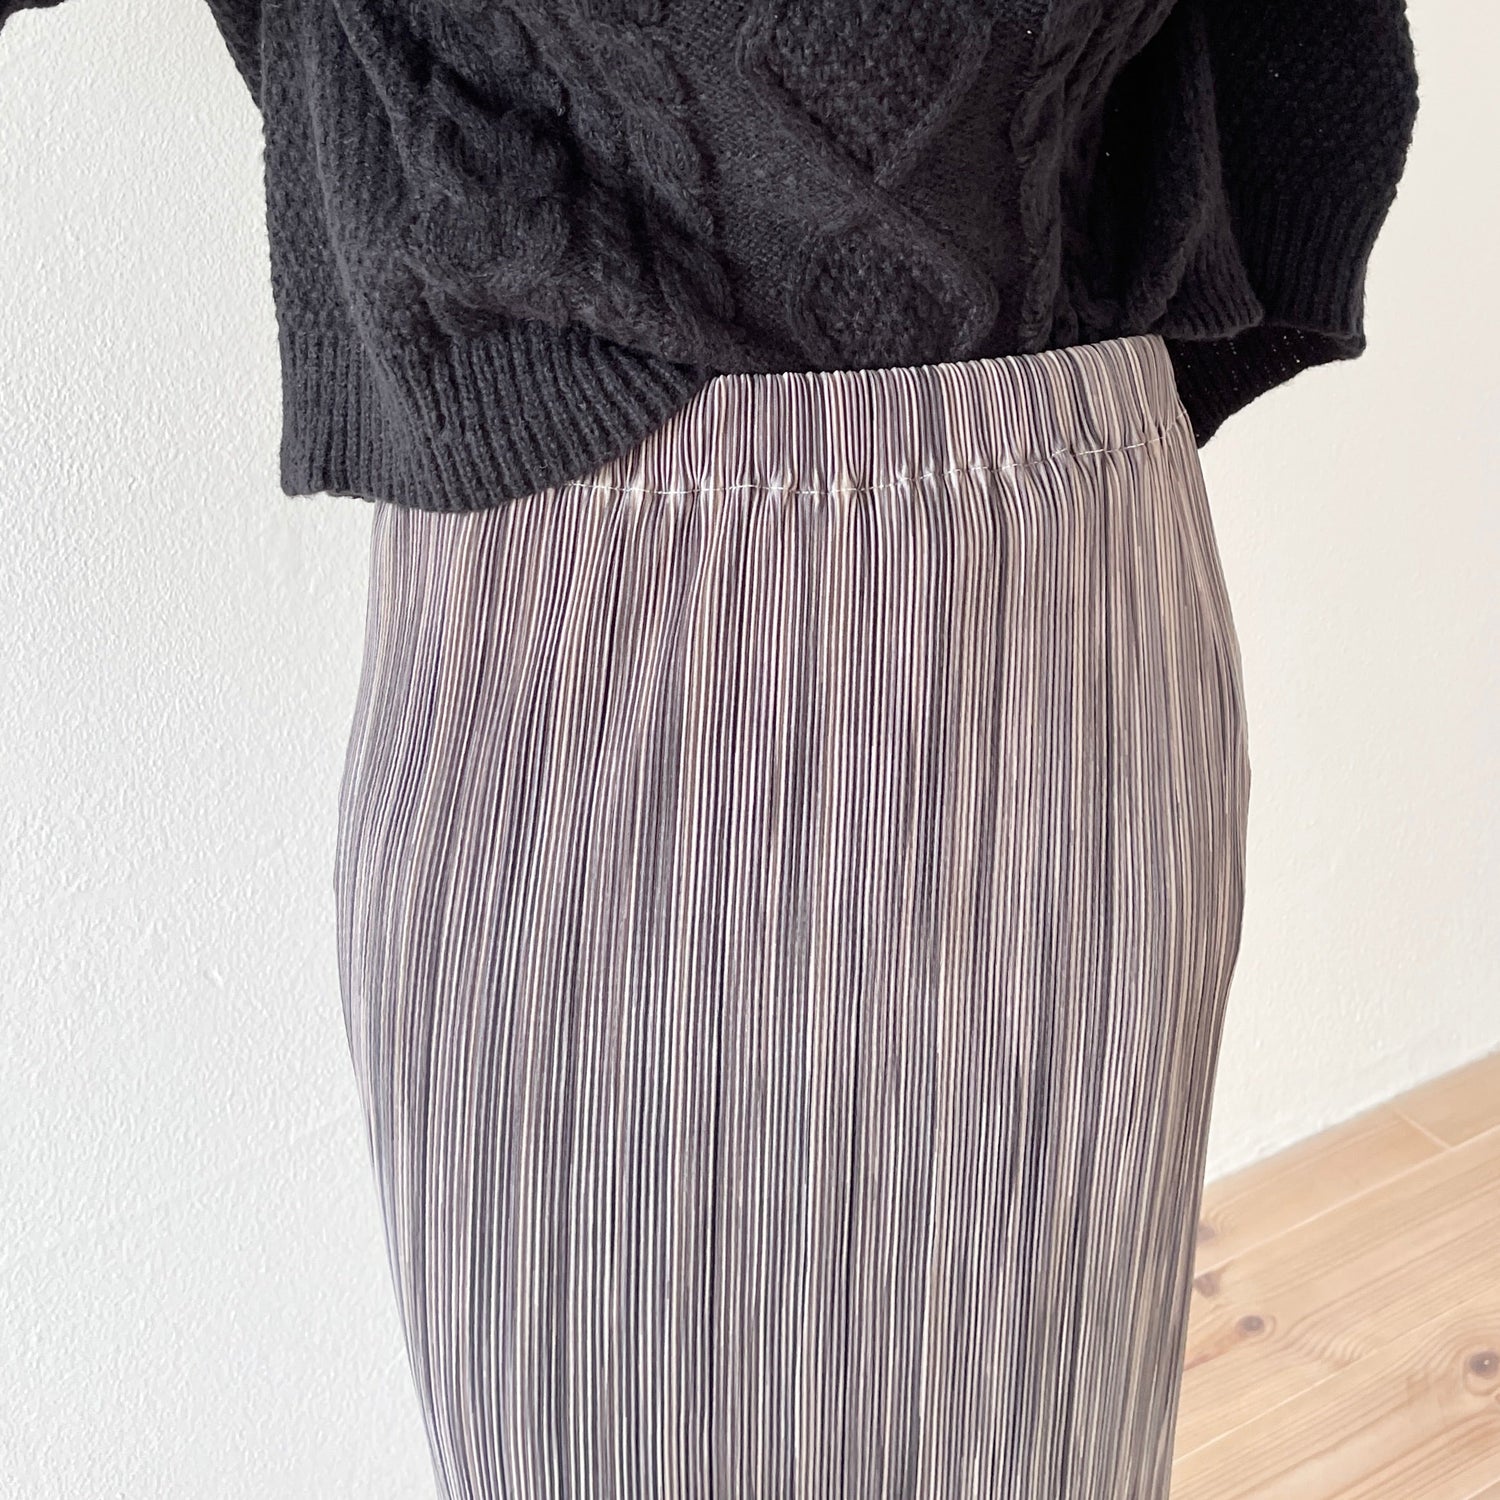 【SAMPLE】daily daily super stretch pleats skirt / kurogoma